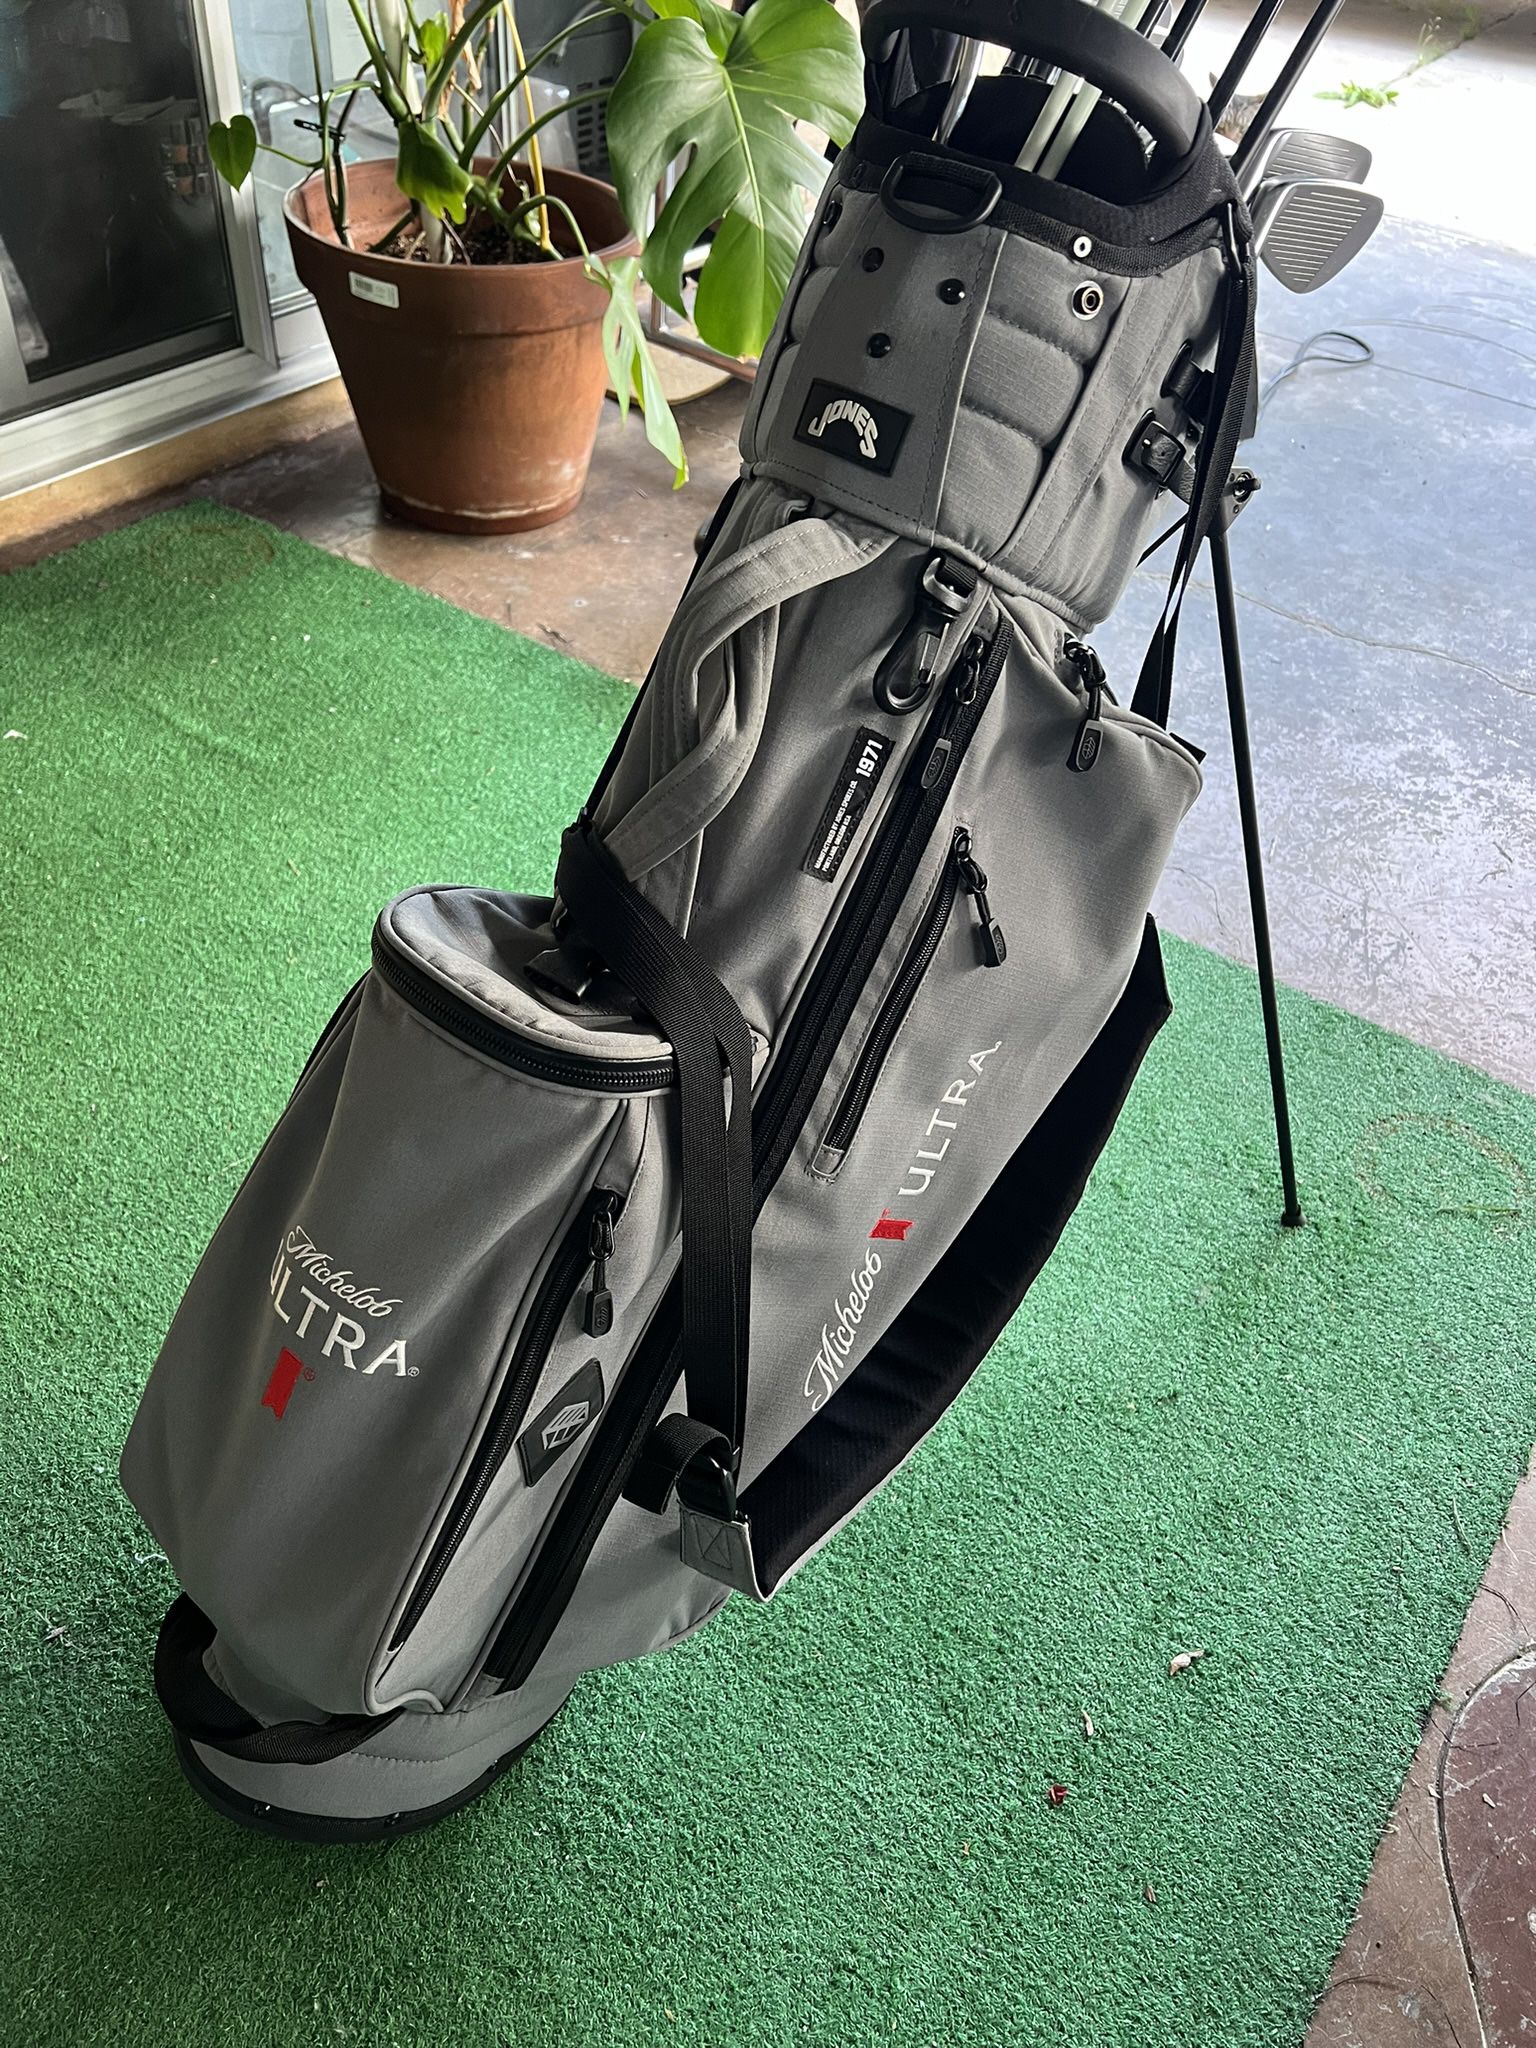 Jones Golf bag (Limited edition)